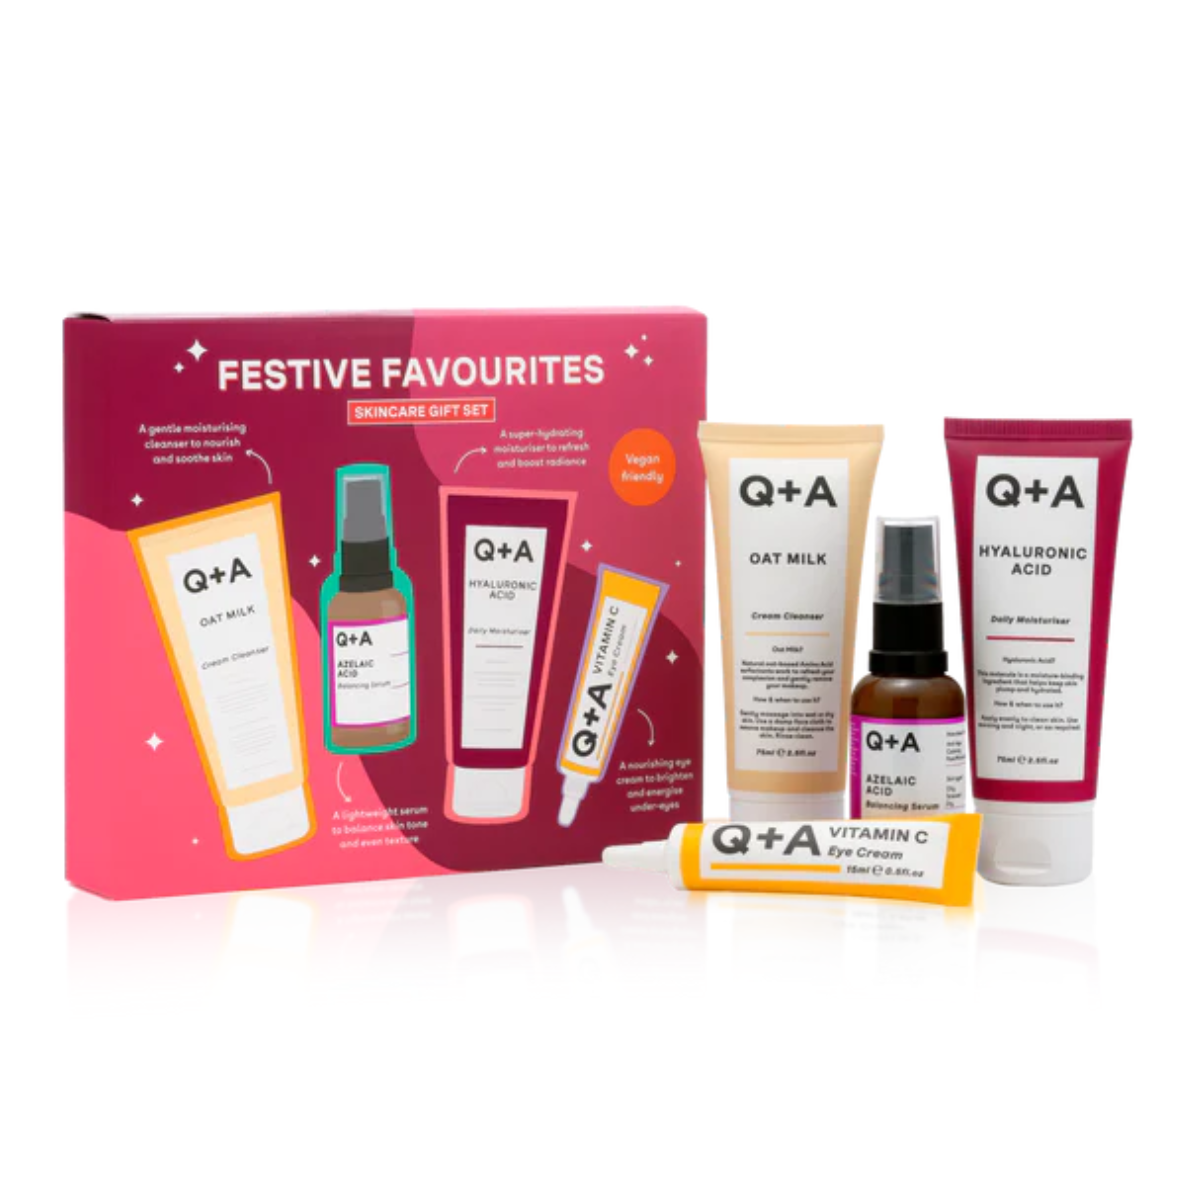 Q+A Festive Favourites Gift Set